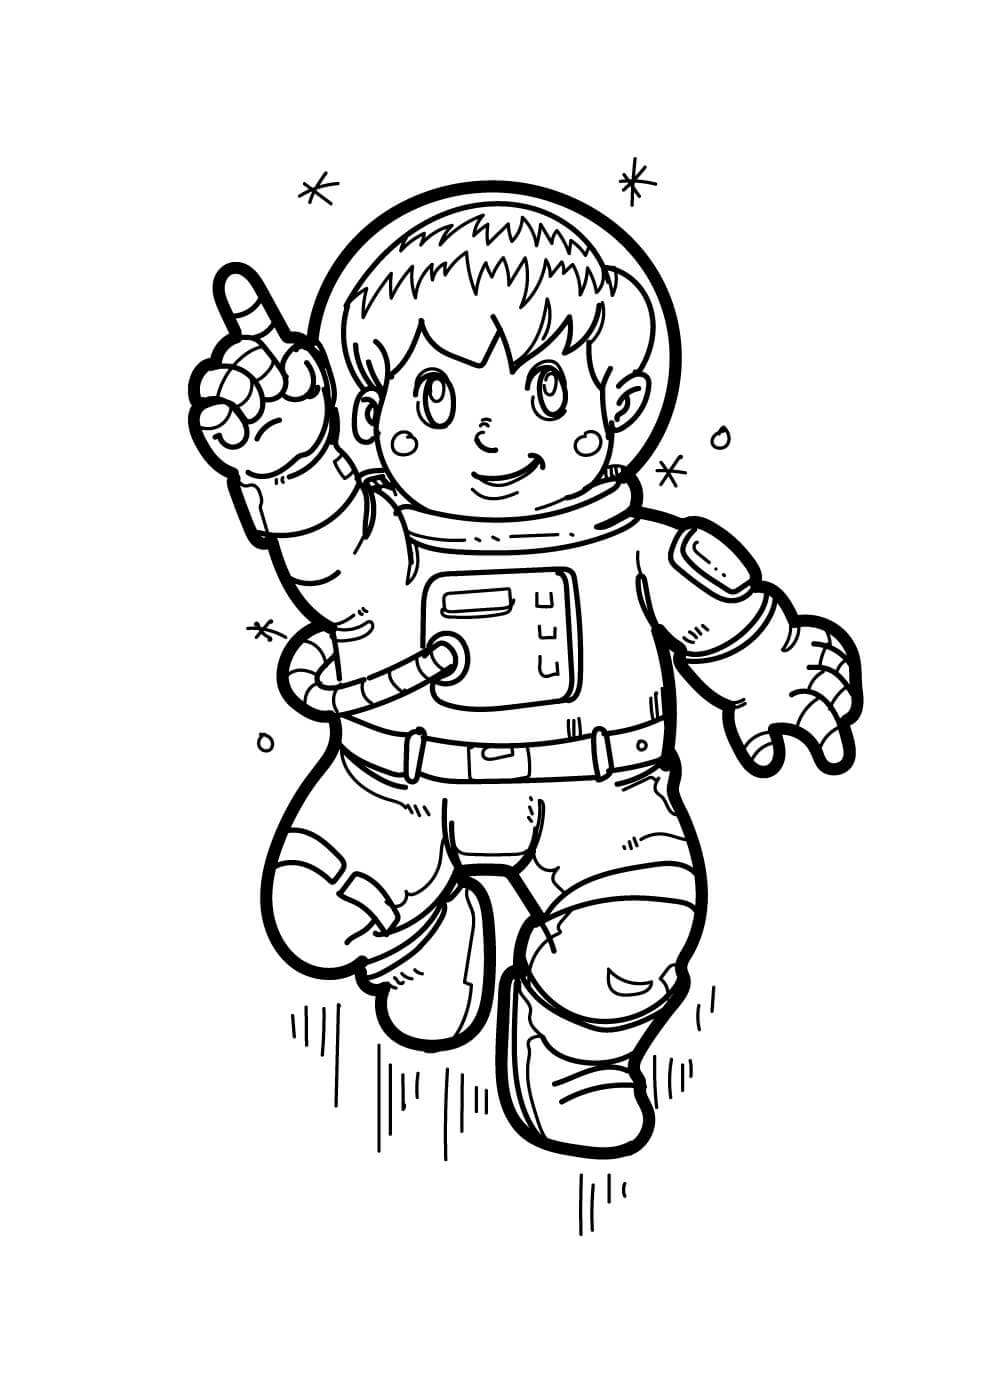 Lindo Chico Astronauta para colorir